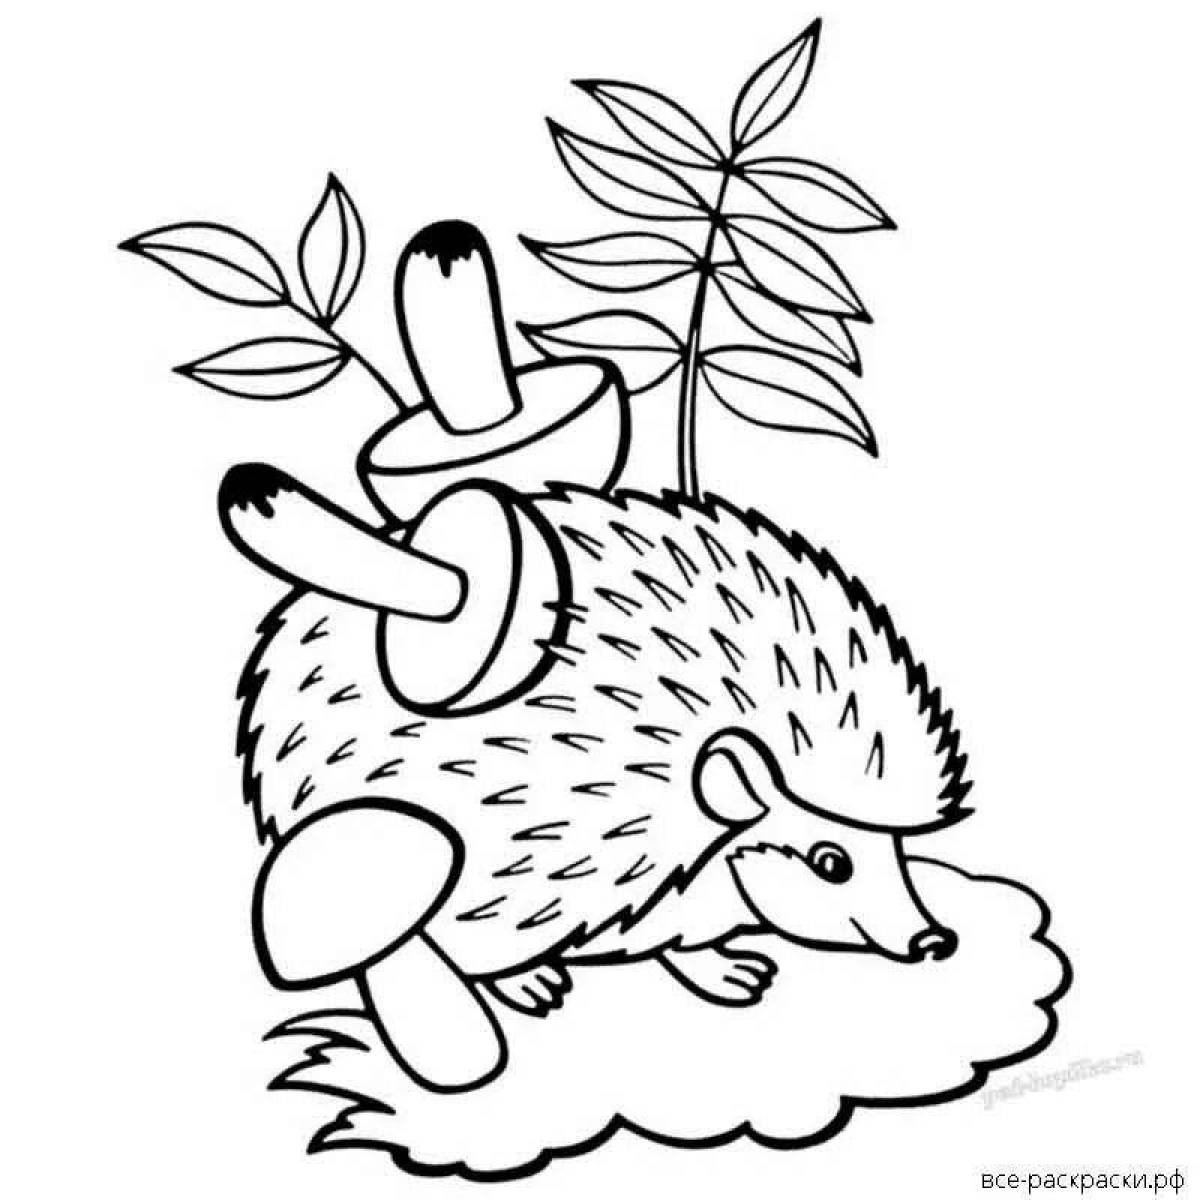 Charming hedgehog coloring book